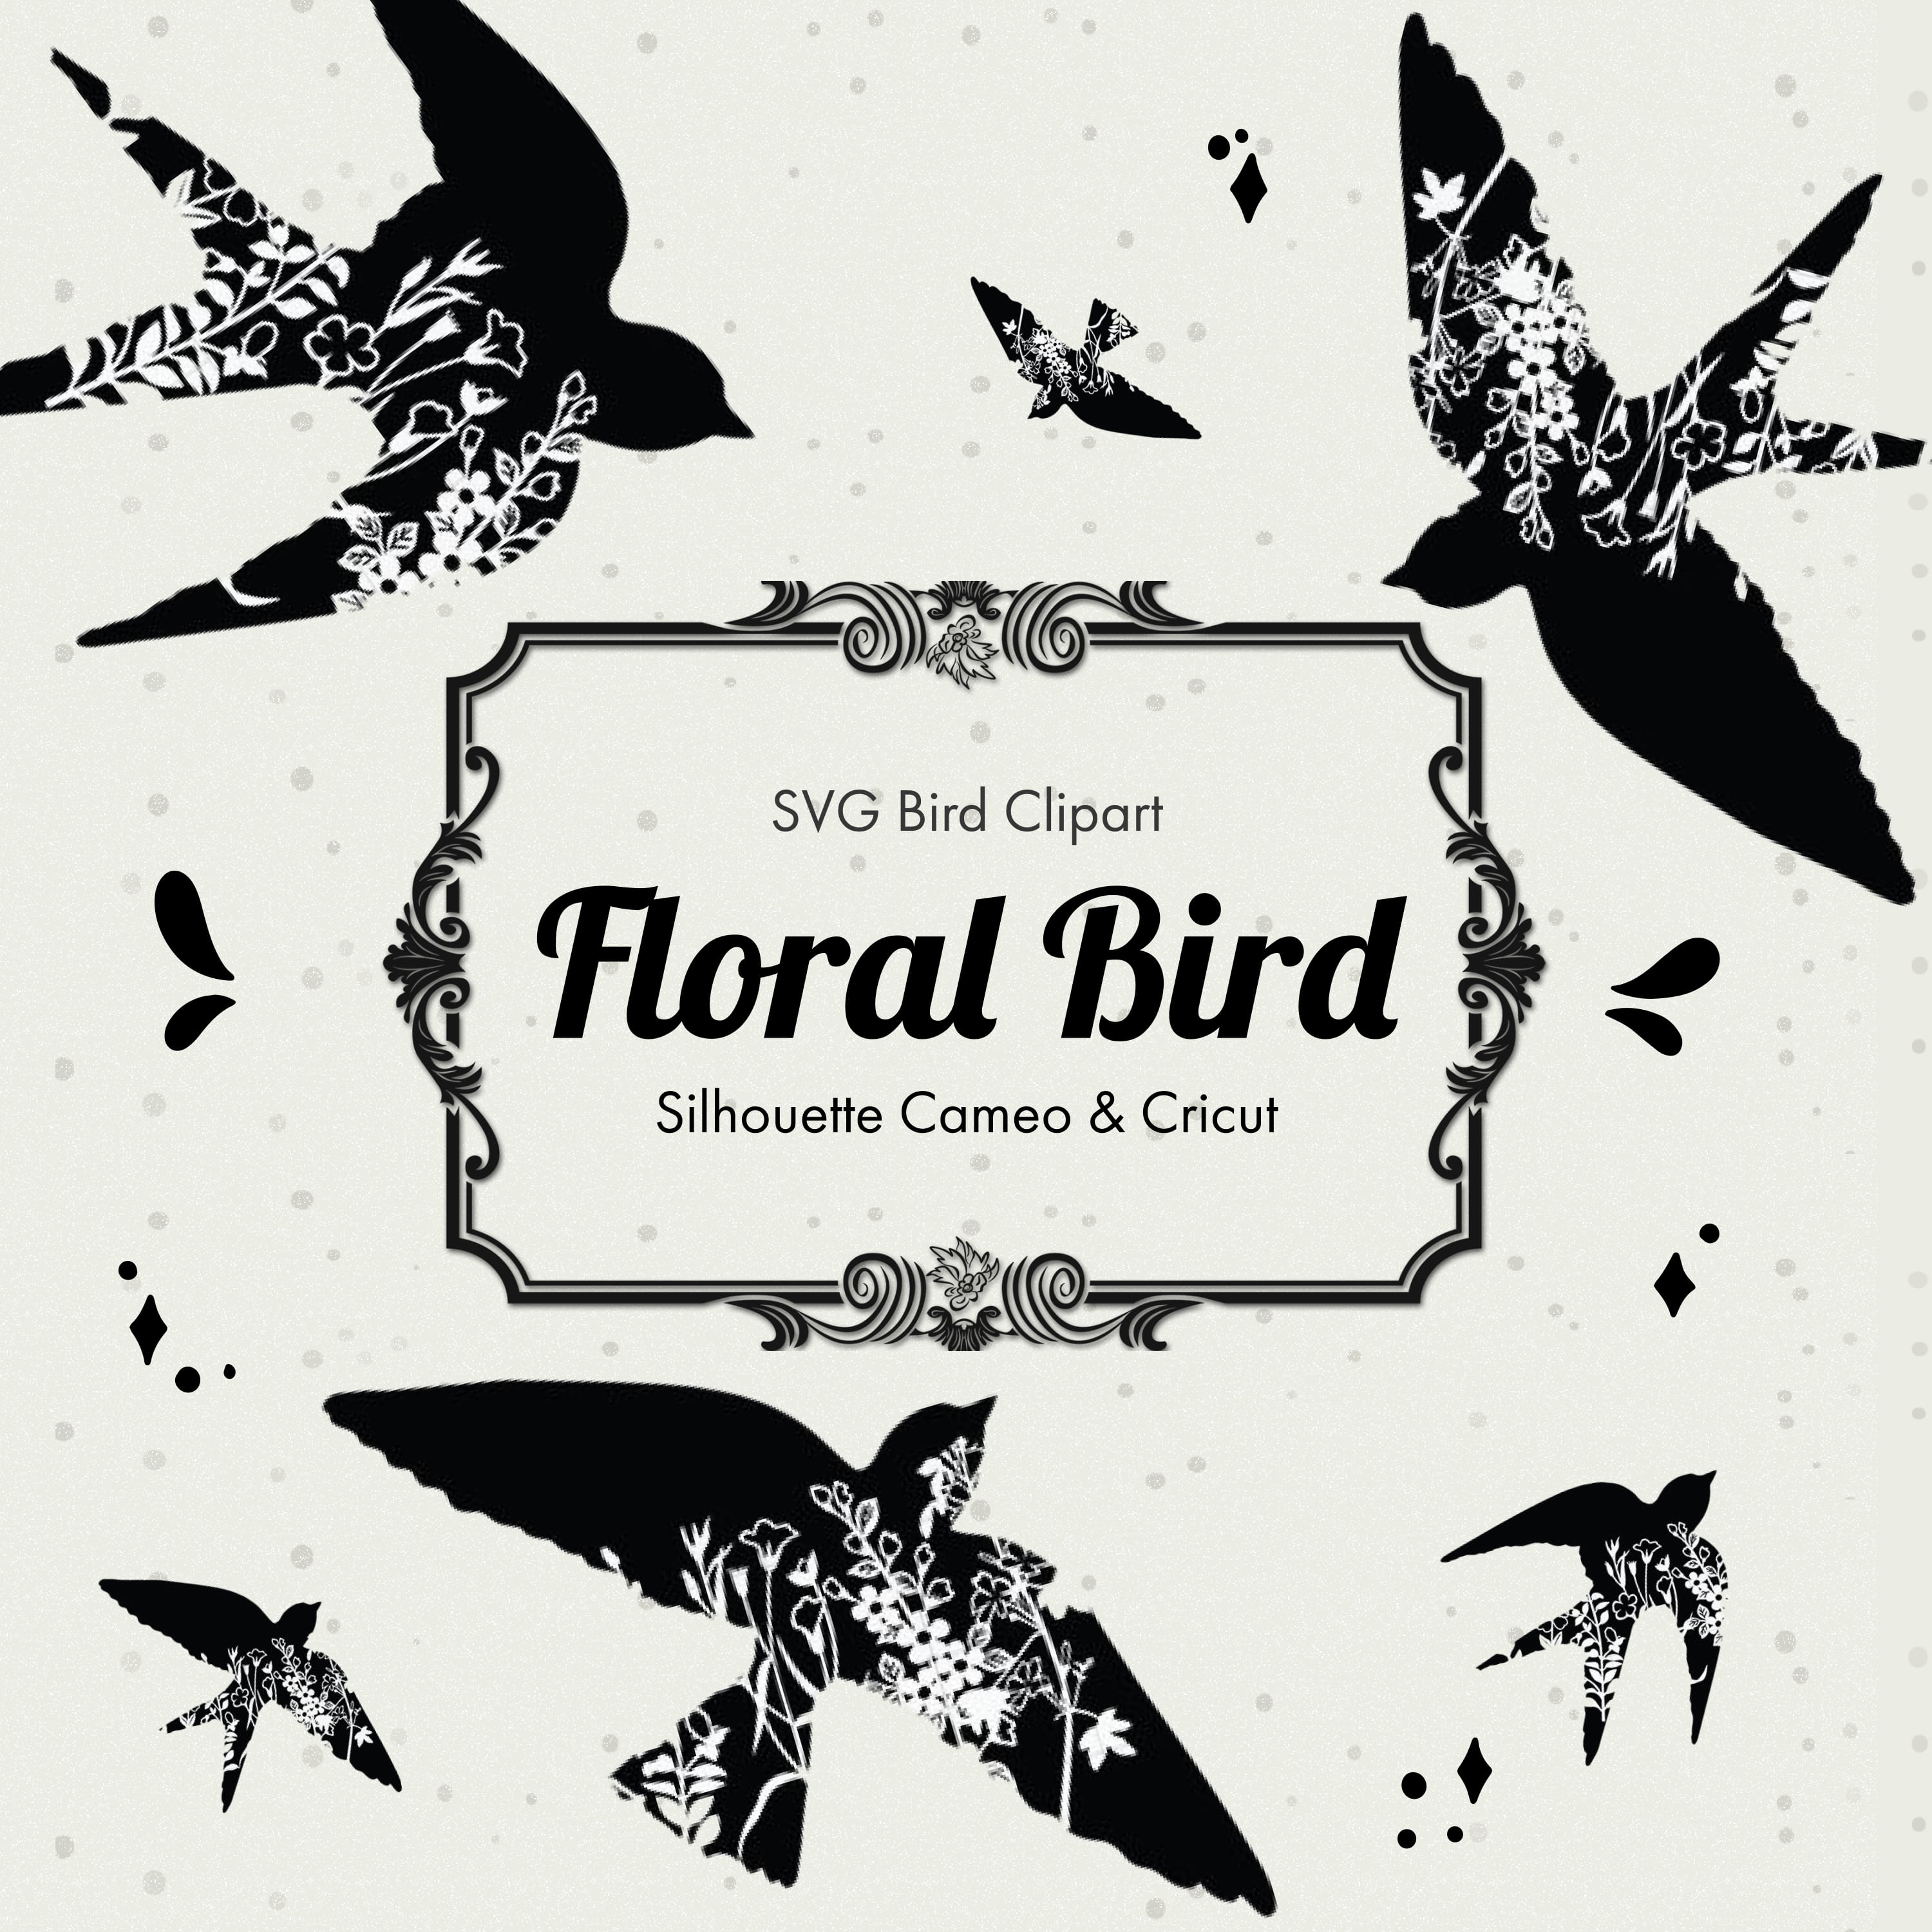 Floral Birds SVG - main image preview.